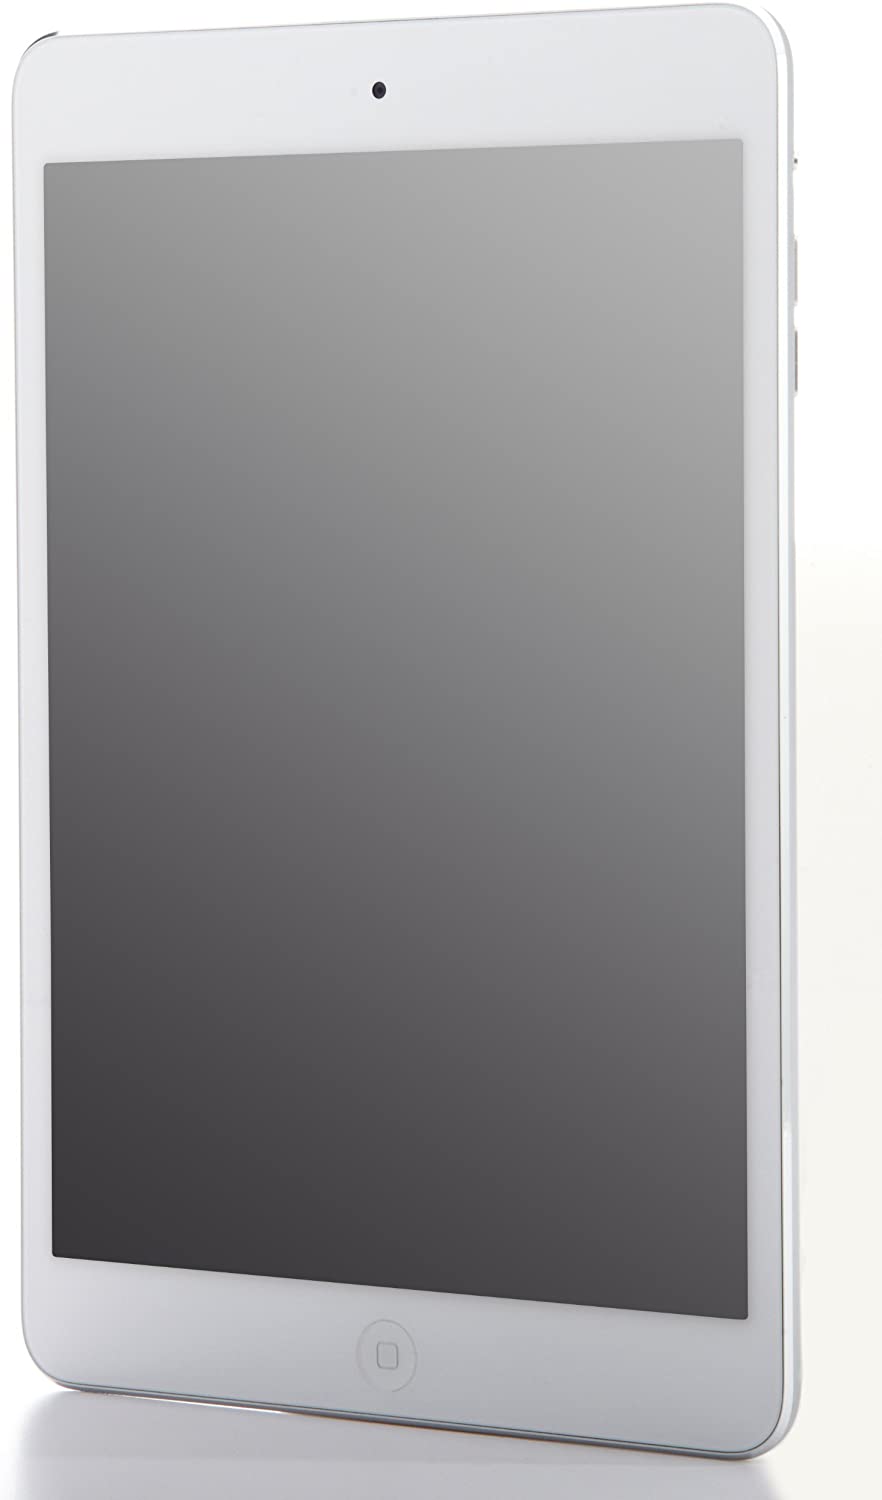 Apple iPad mini MD531LL/A (16GB, Wi-Fi Only, White / Silver